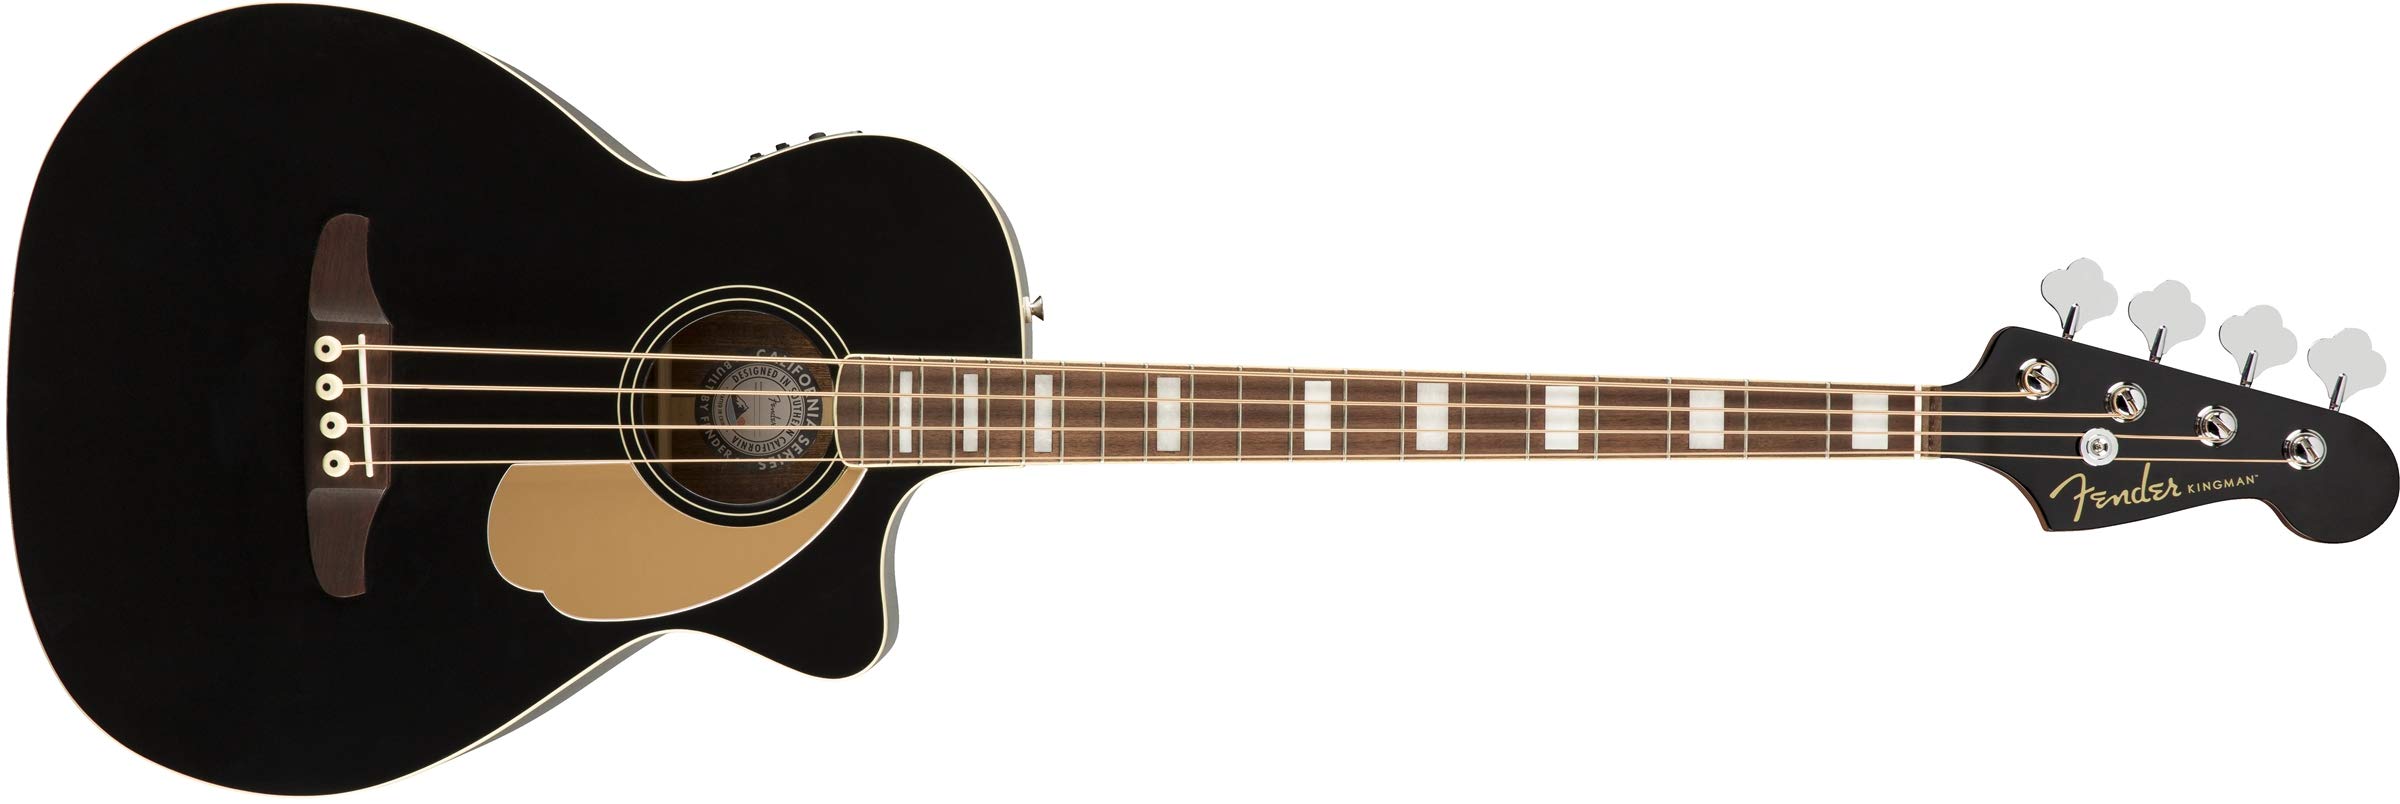 Fender Bajo acústico Kingman (V2) - Negro - con funda - Diapasón de nogal